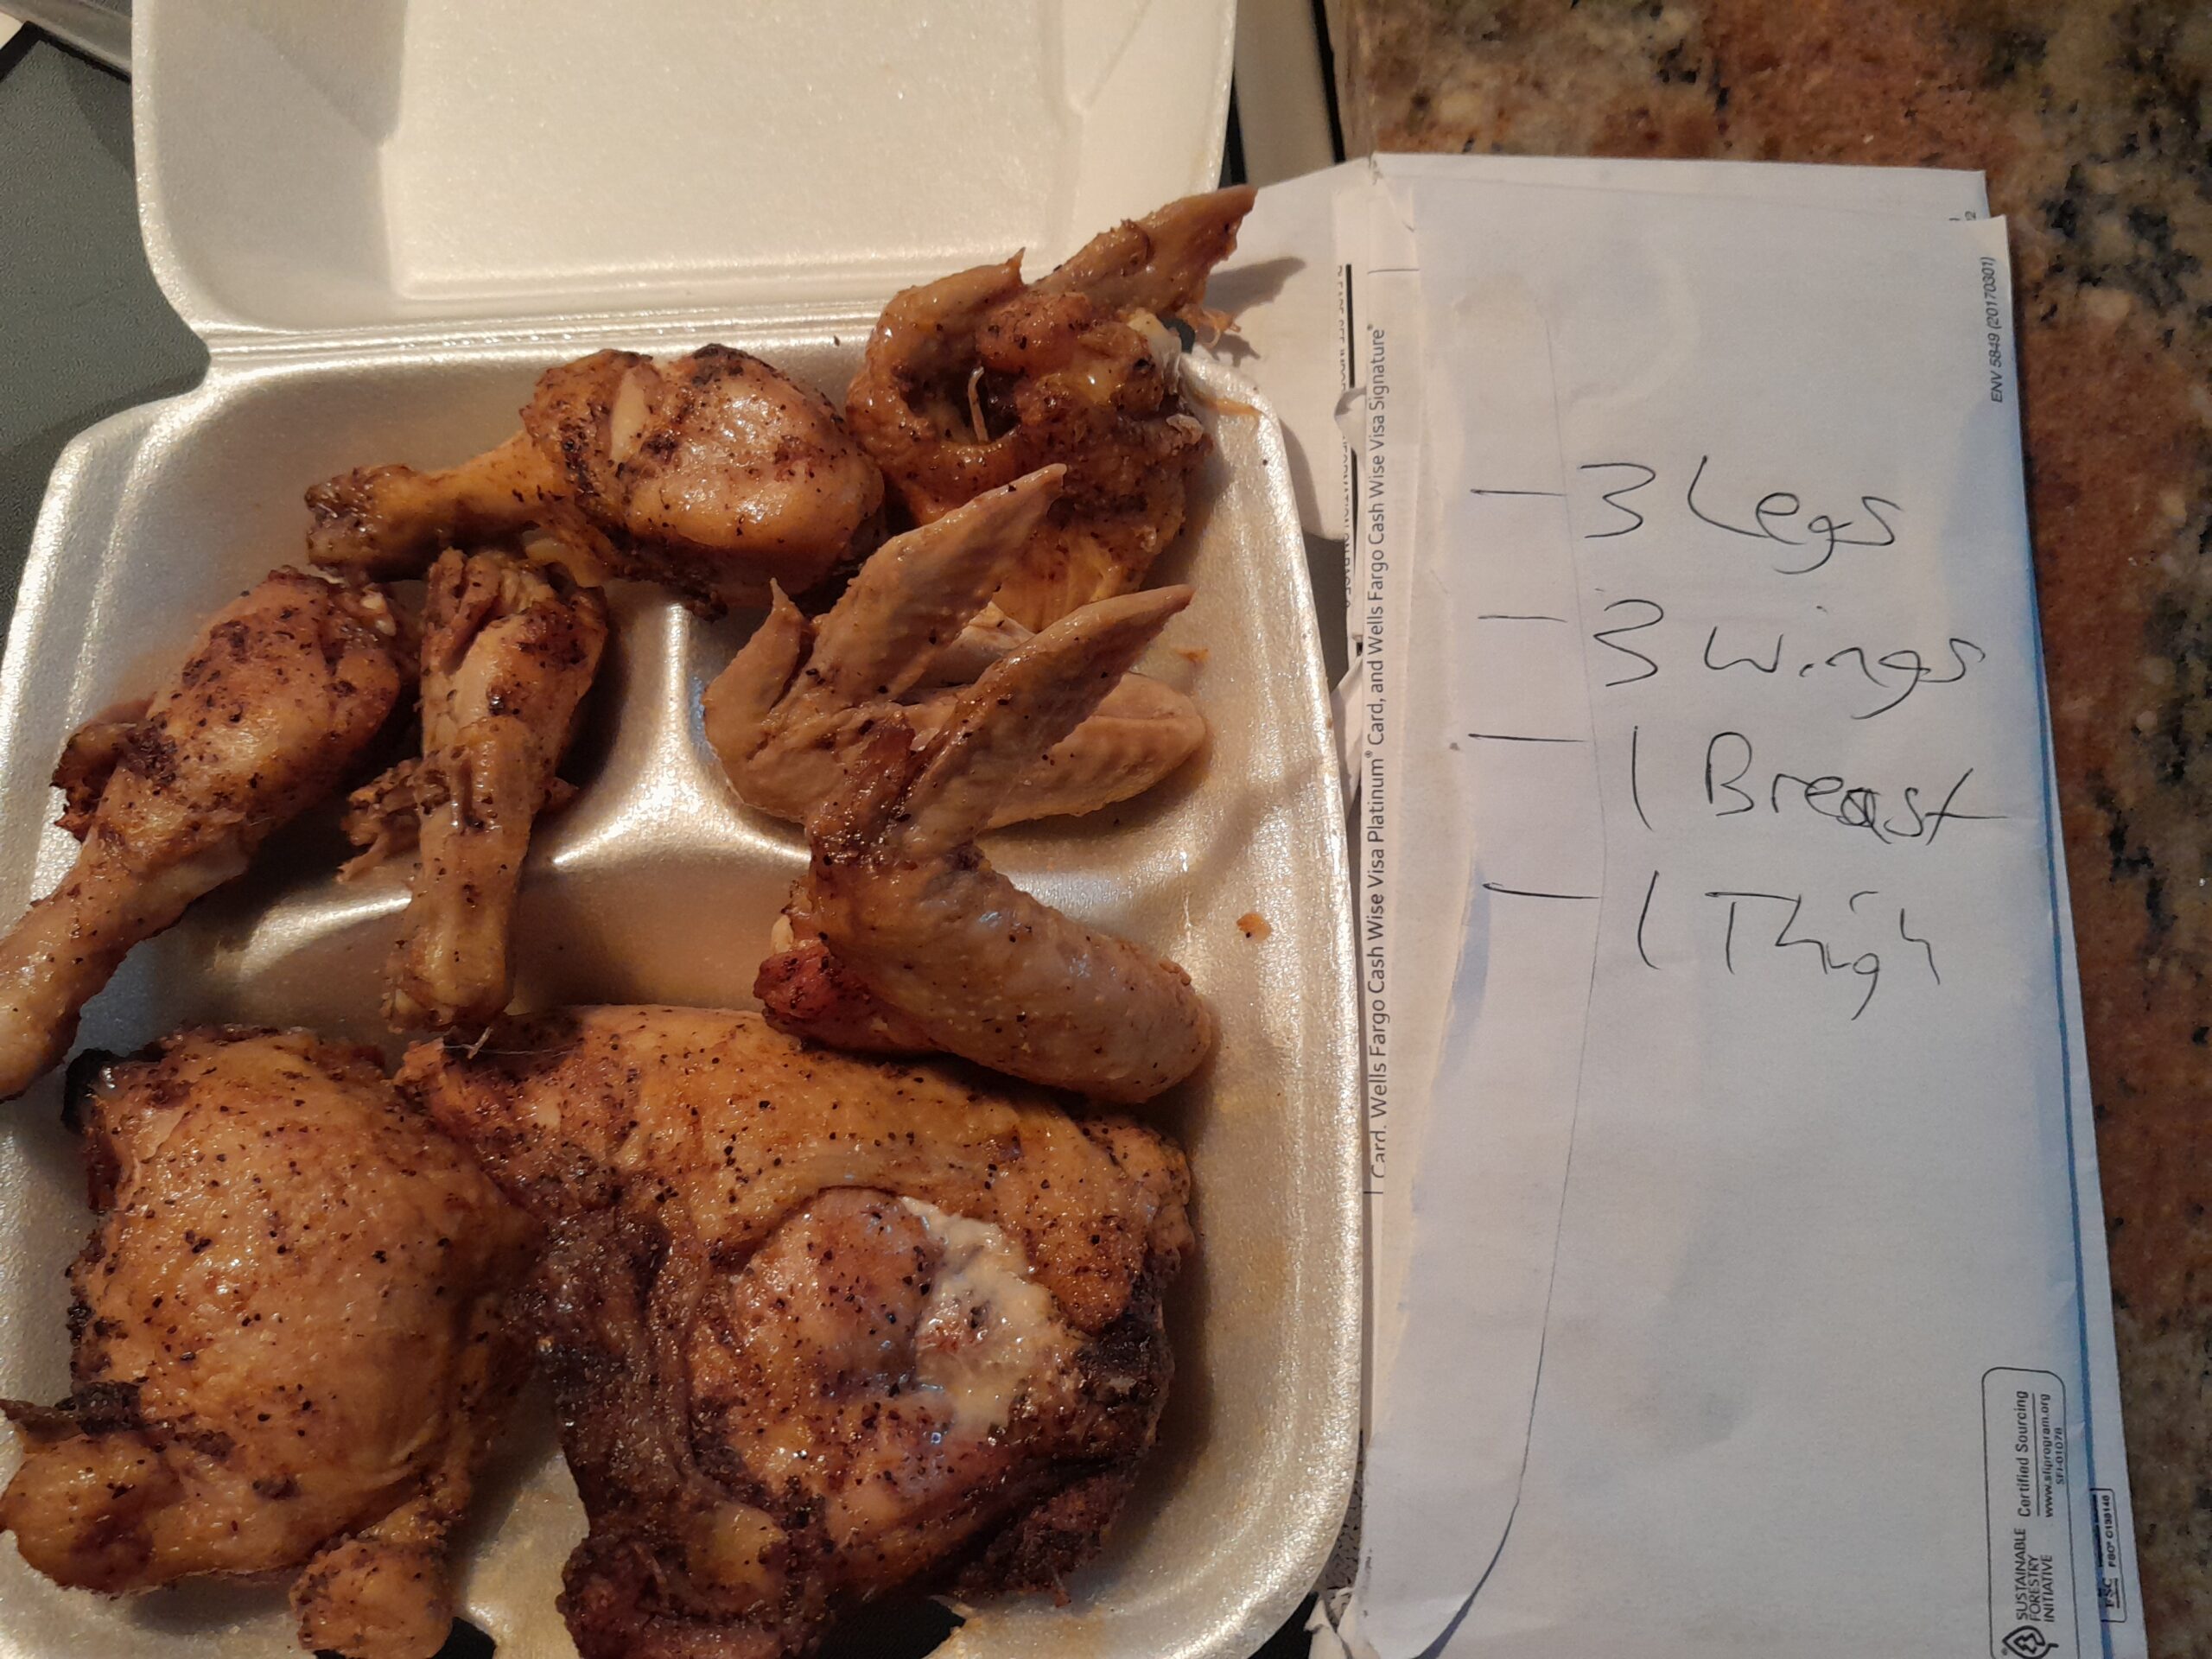 8 piece baked chicken order incorrect